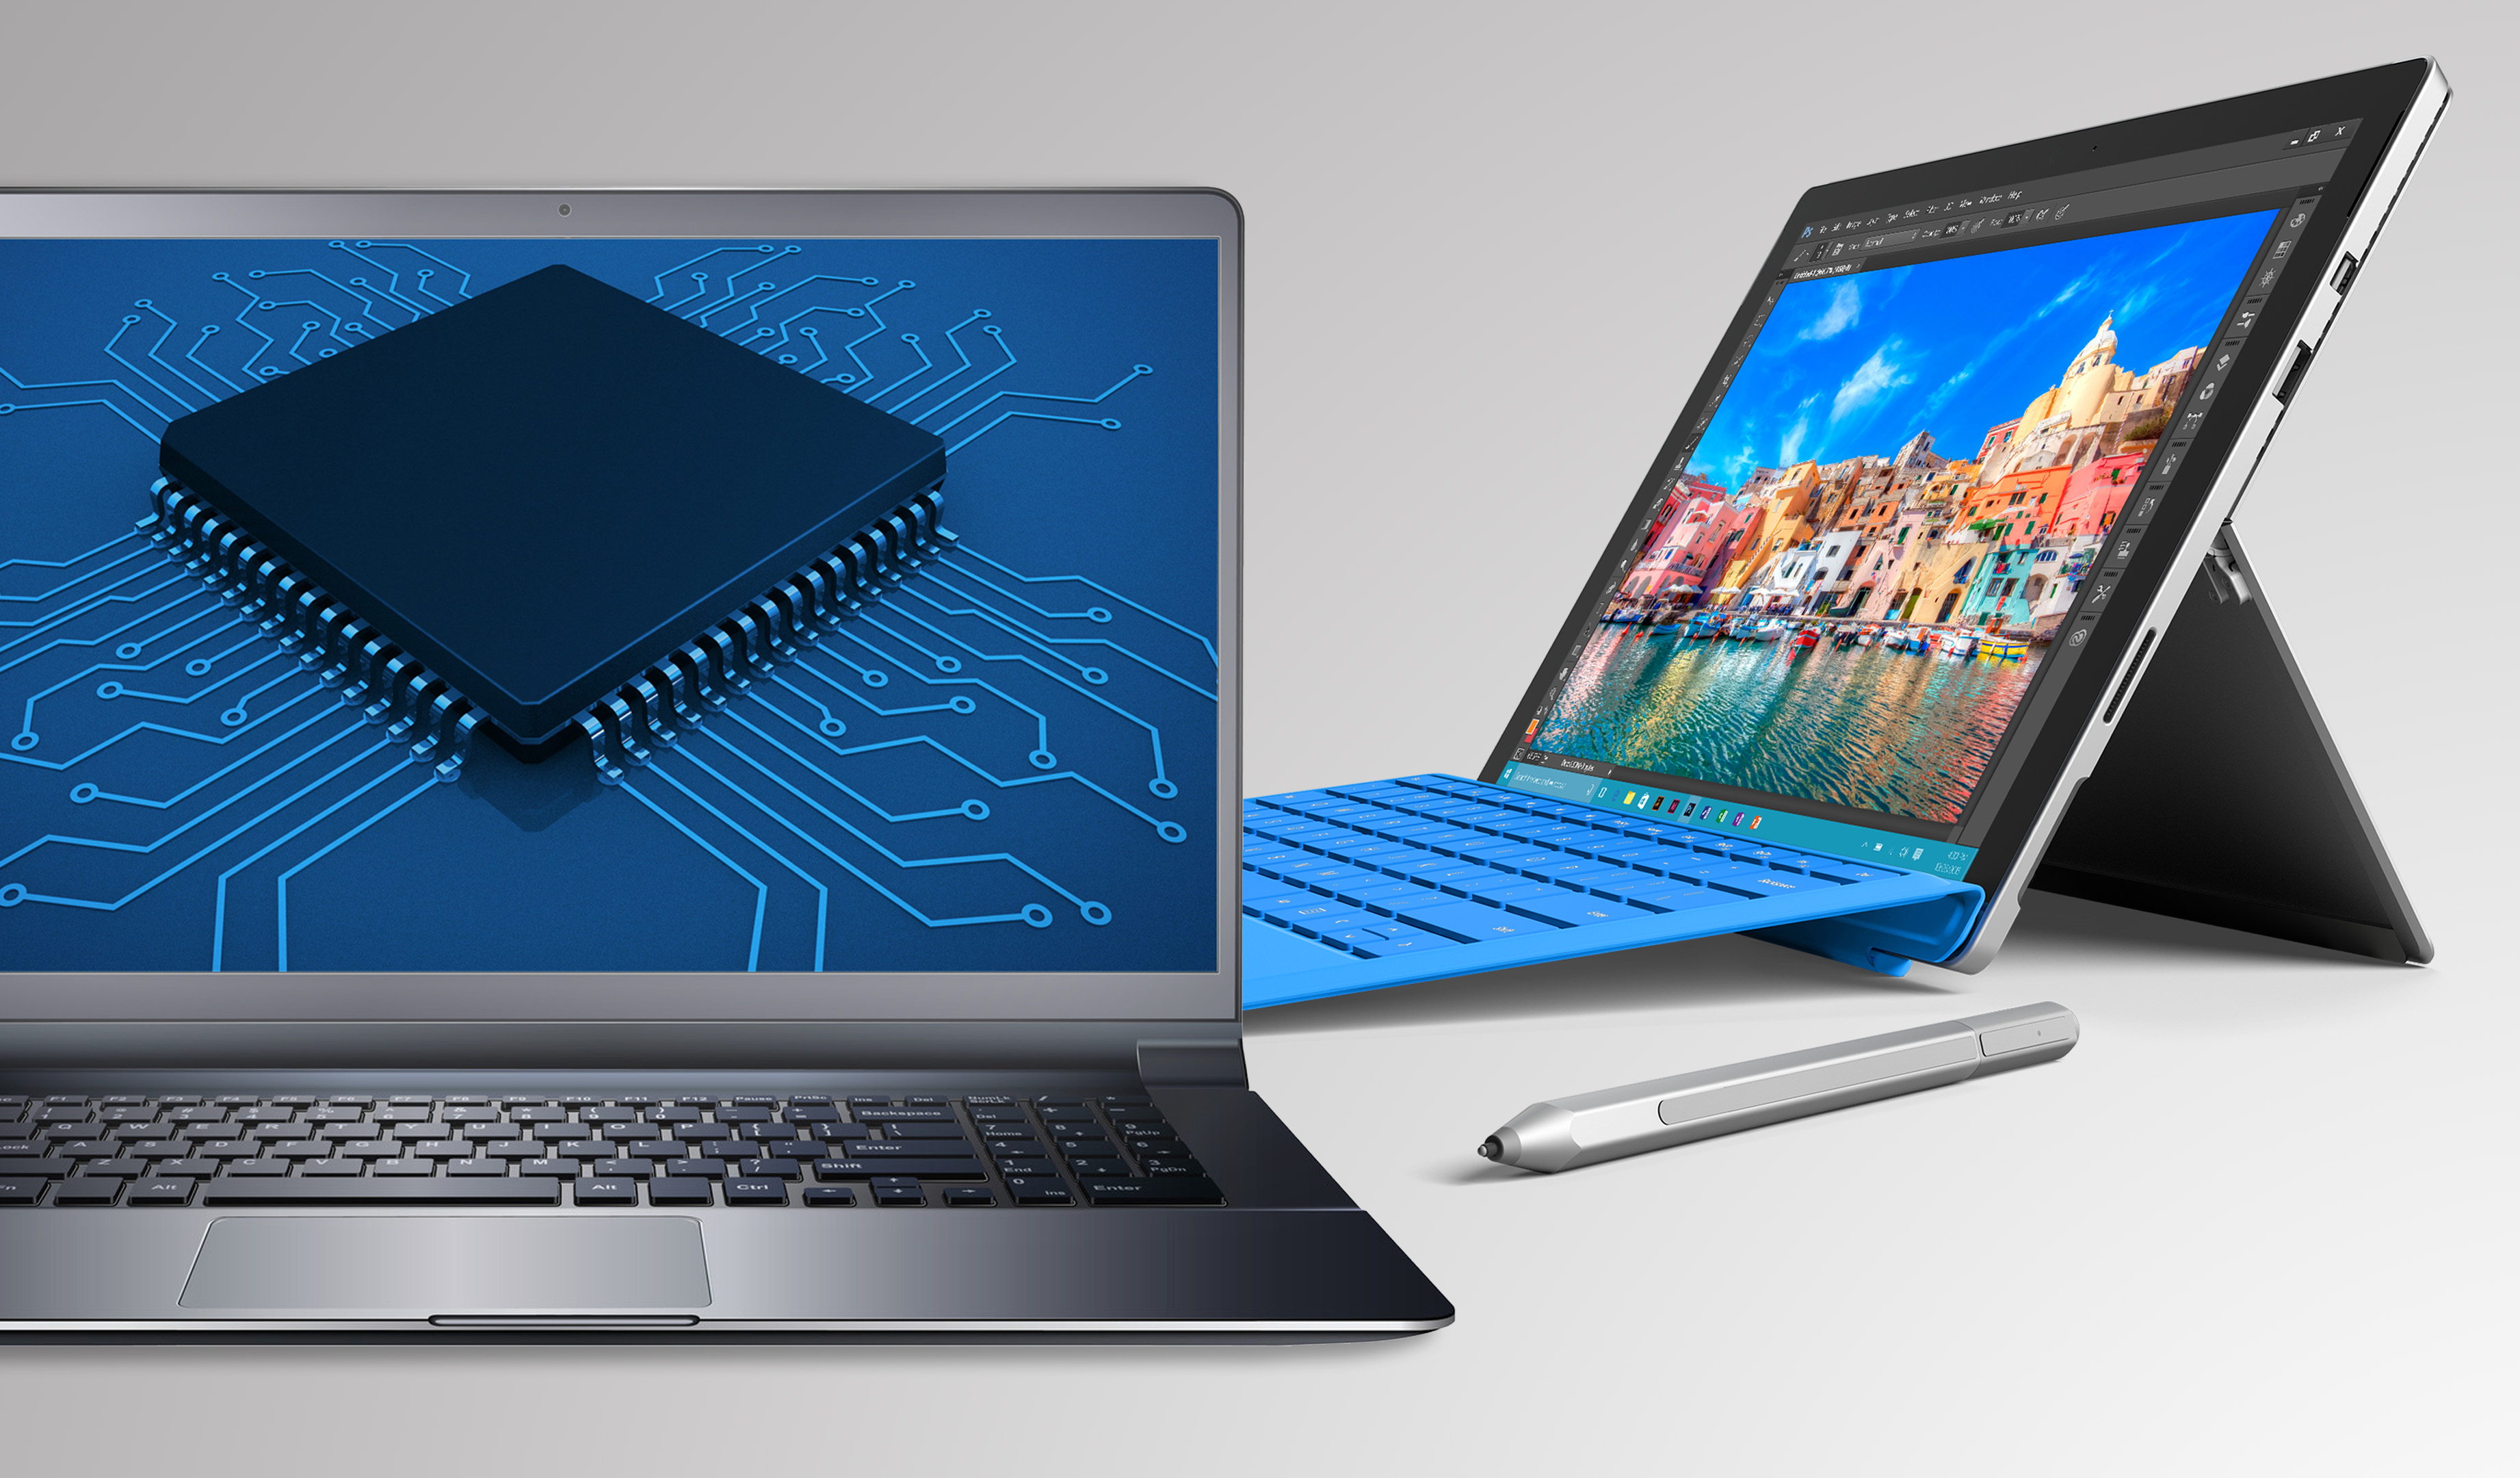 Jaki procesor do tabletu lub laptopa?